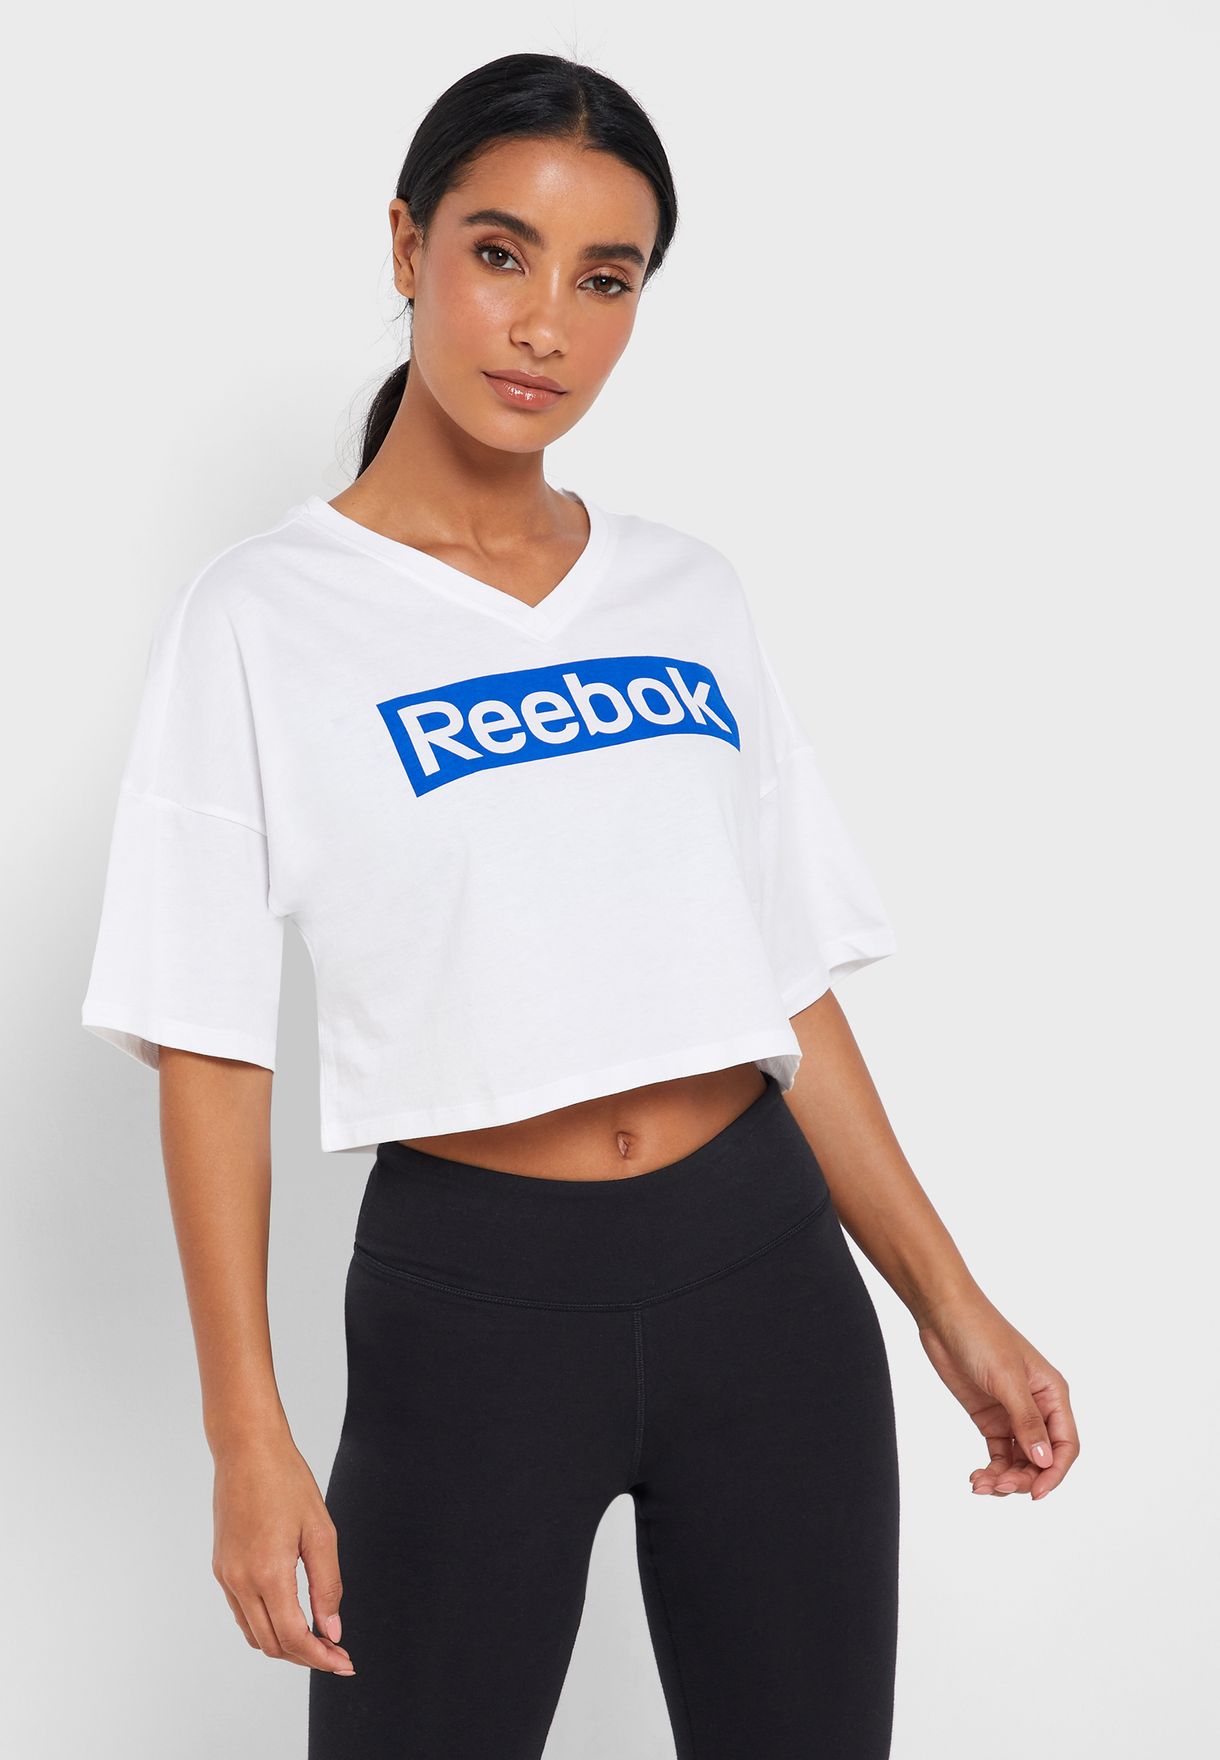 reebok graphic t shirts